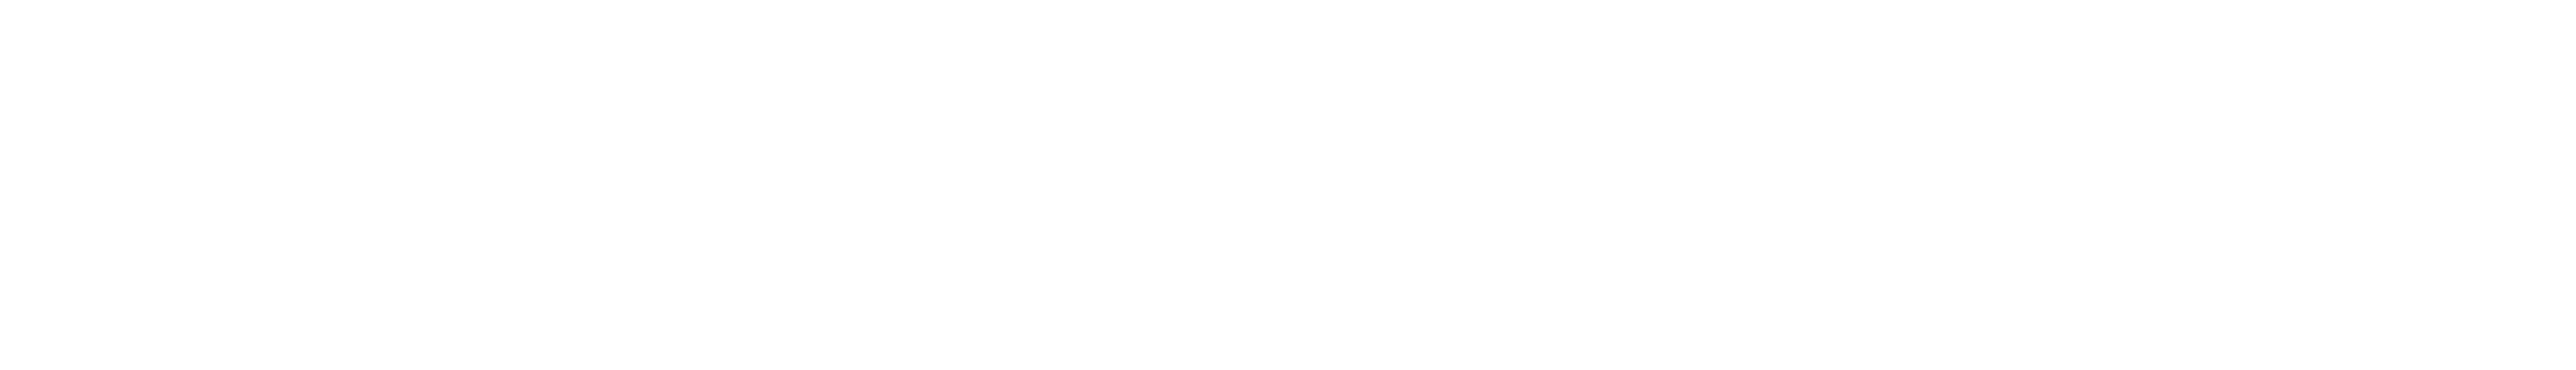 makuku white logo